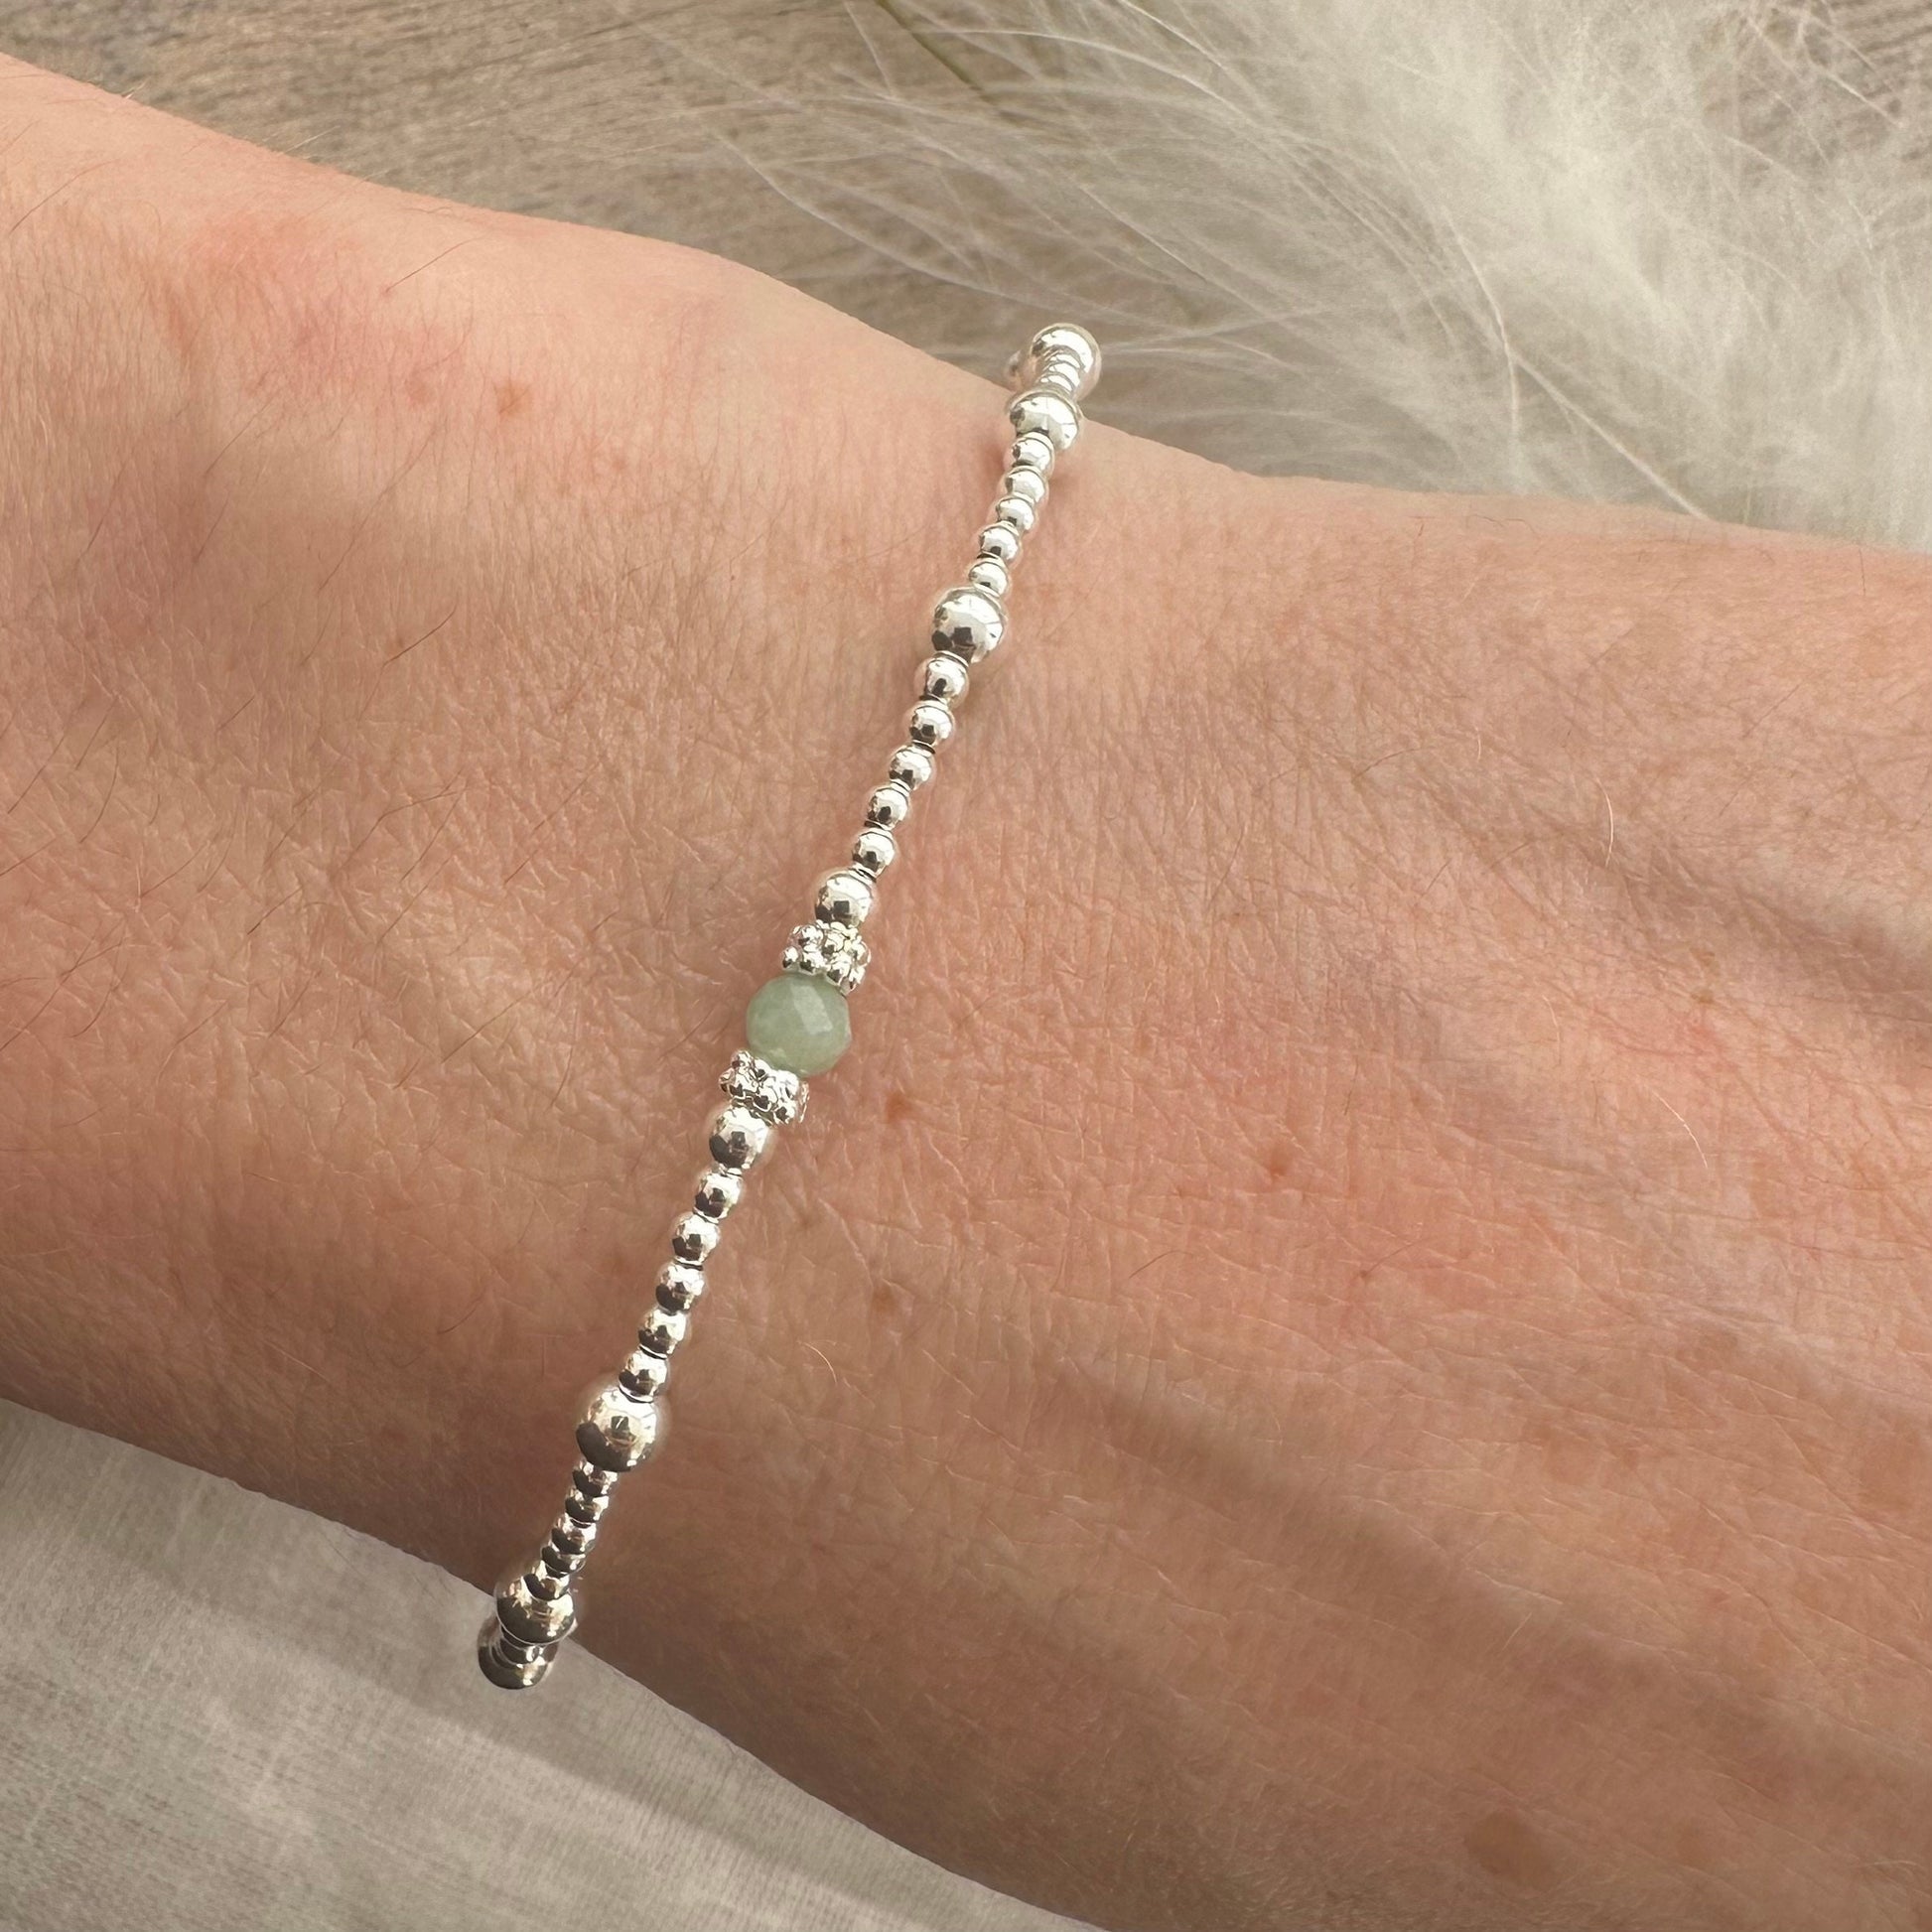 May Birthstone Emerald Layering Bracelet, Adjustable Sterling silver beaded bracelet May birthday gift for women